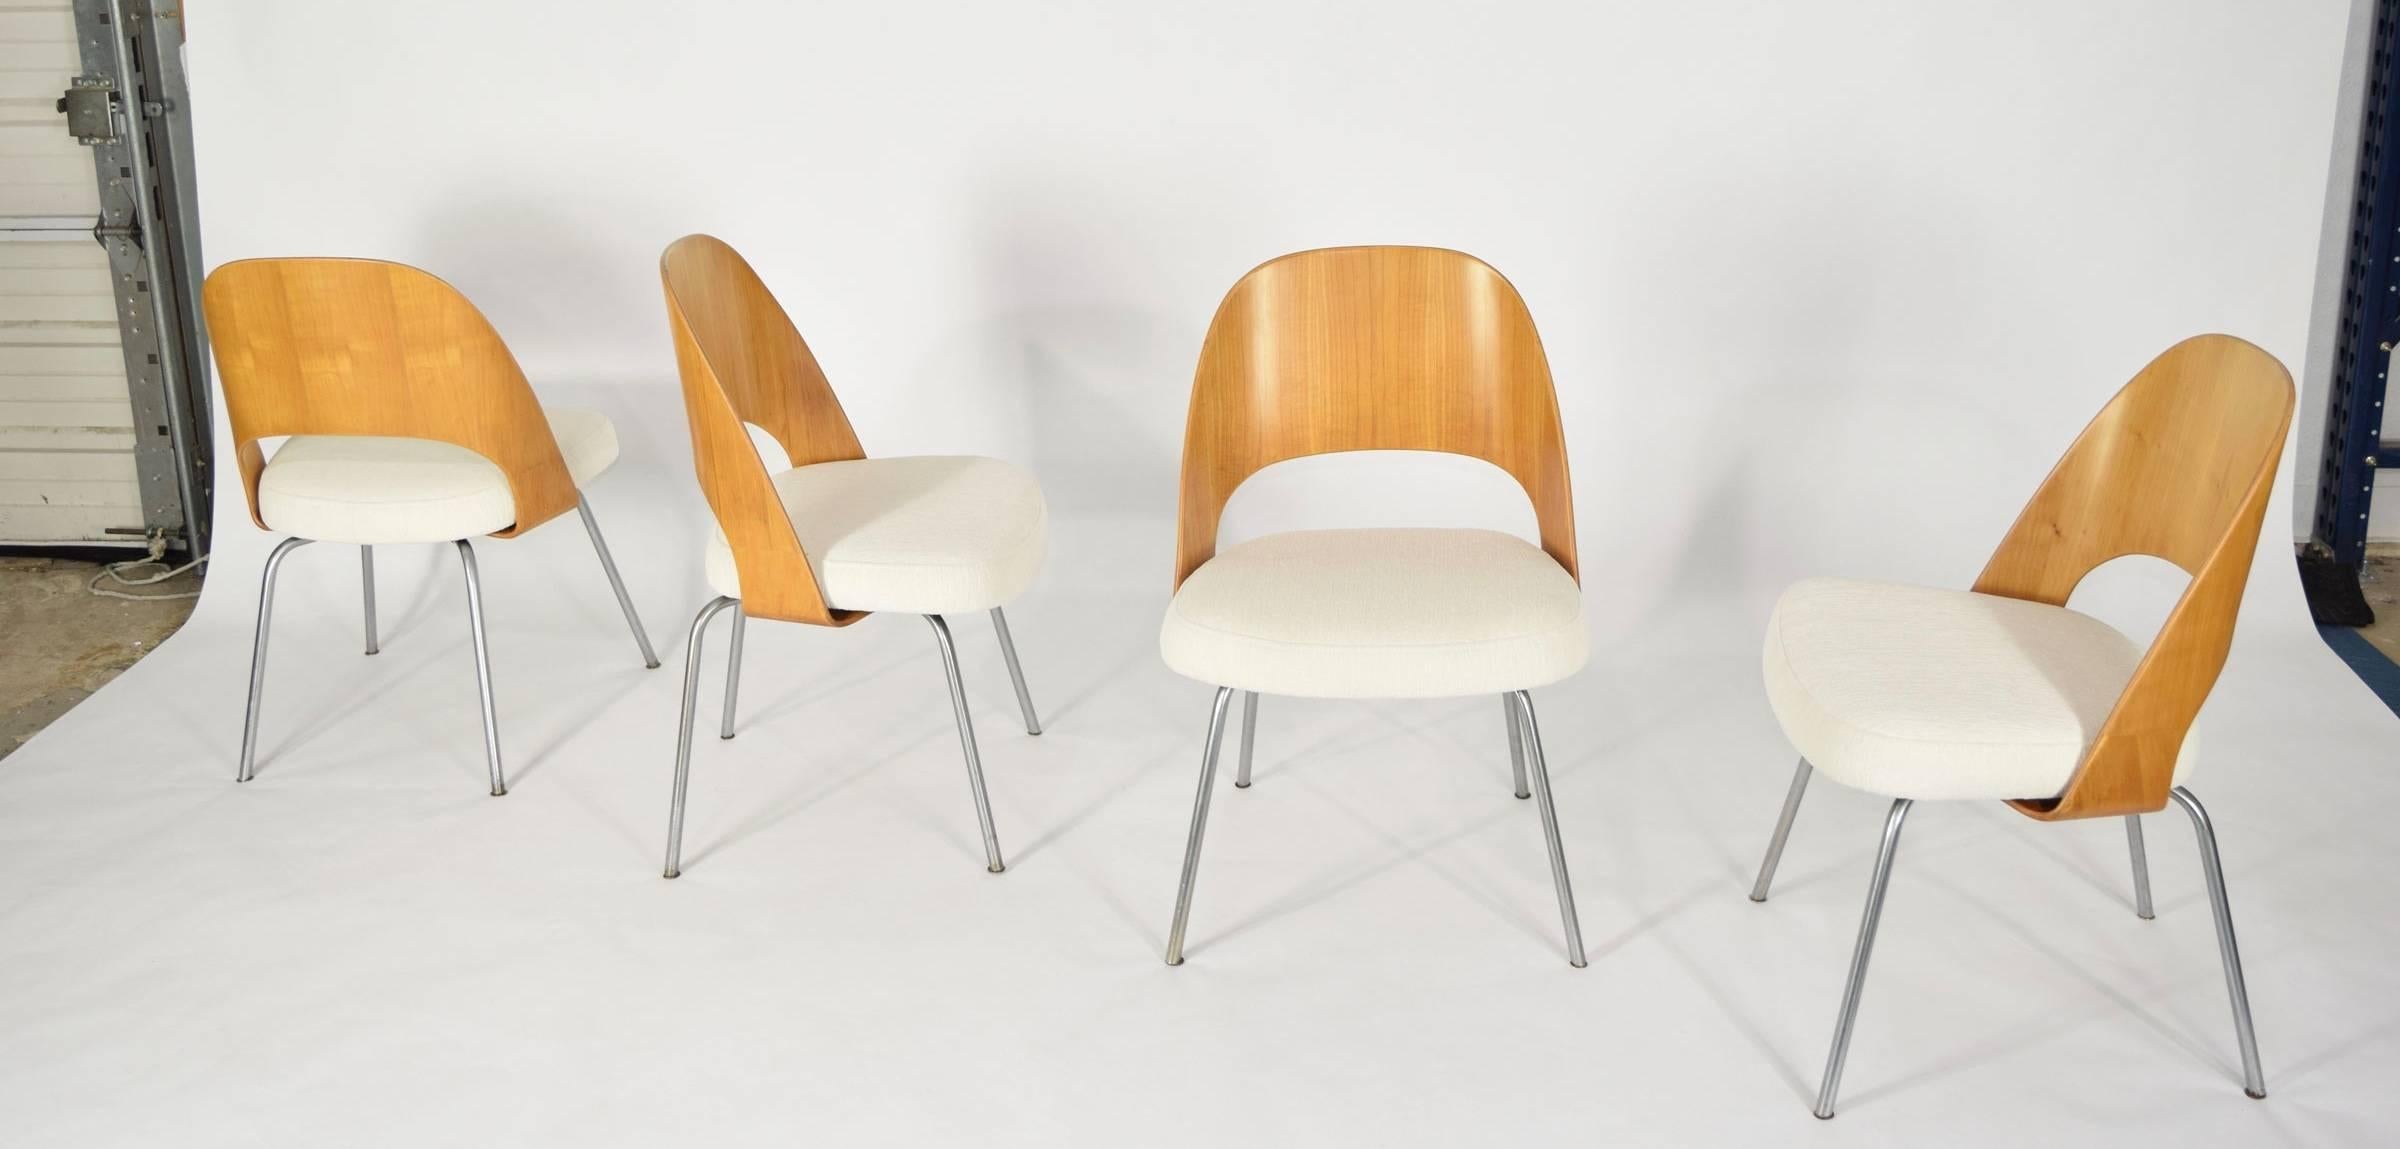 20th Century Rare Set of Eero Saarinen for Knoll Executive Chairs with Wood Backs